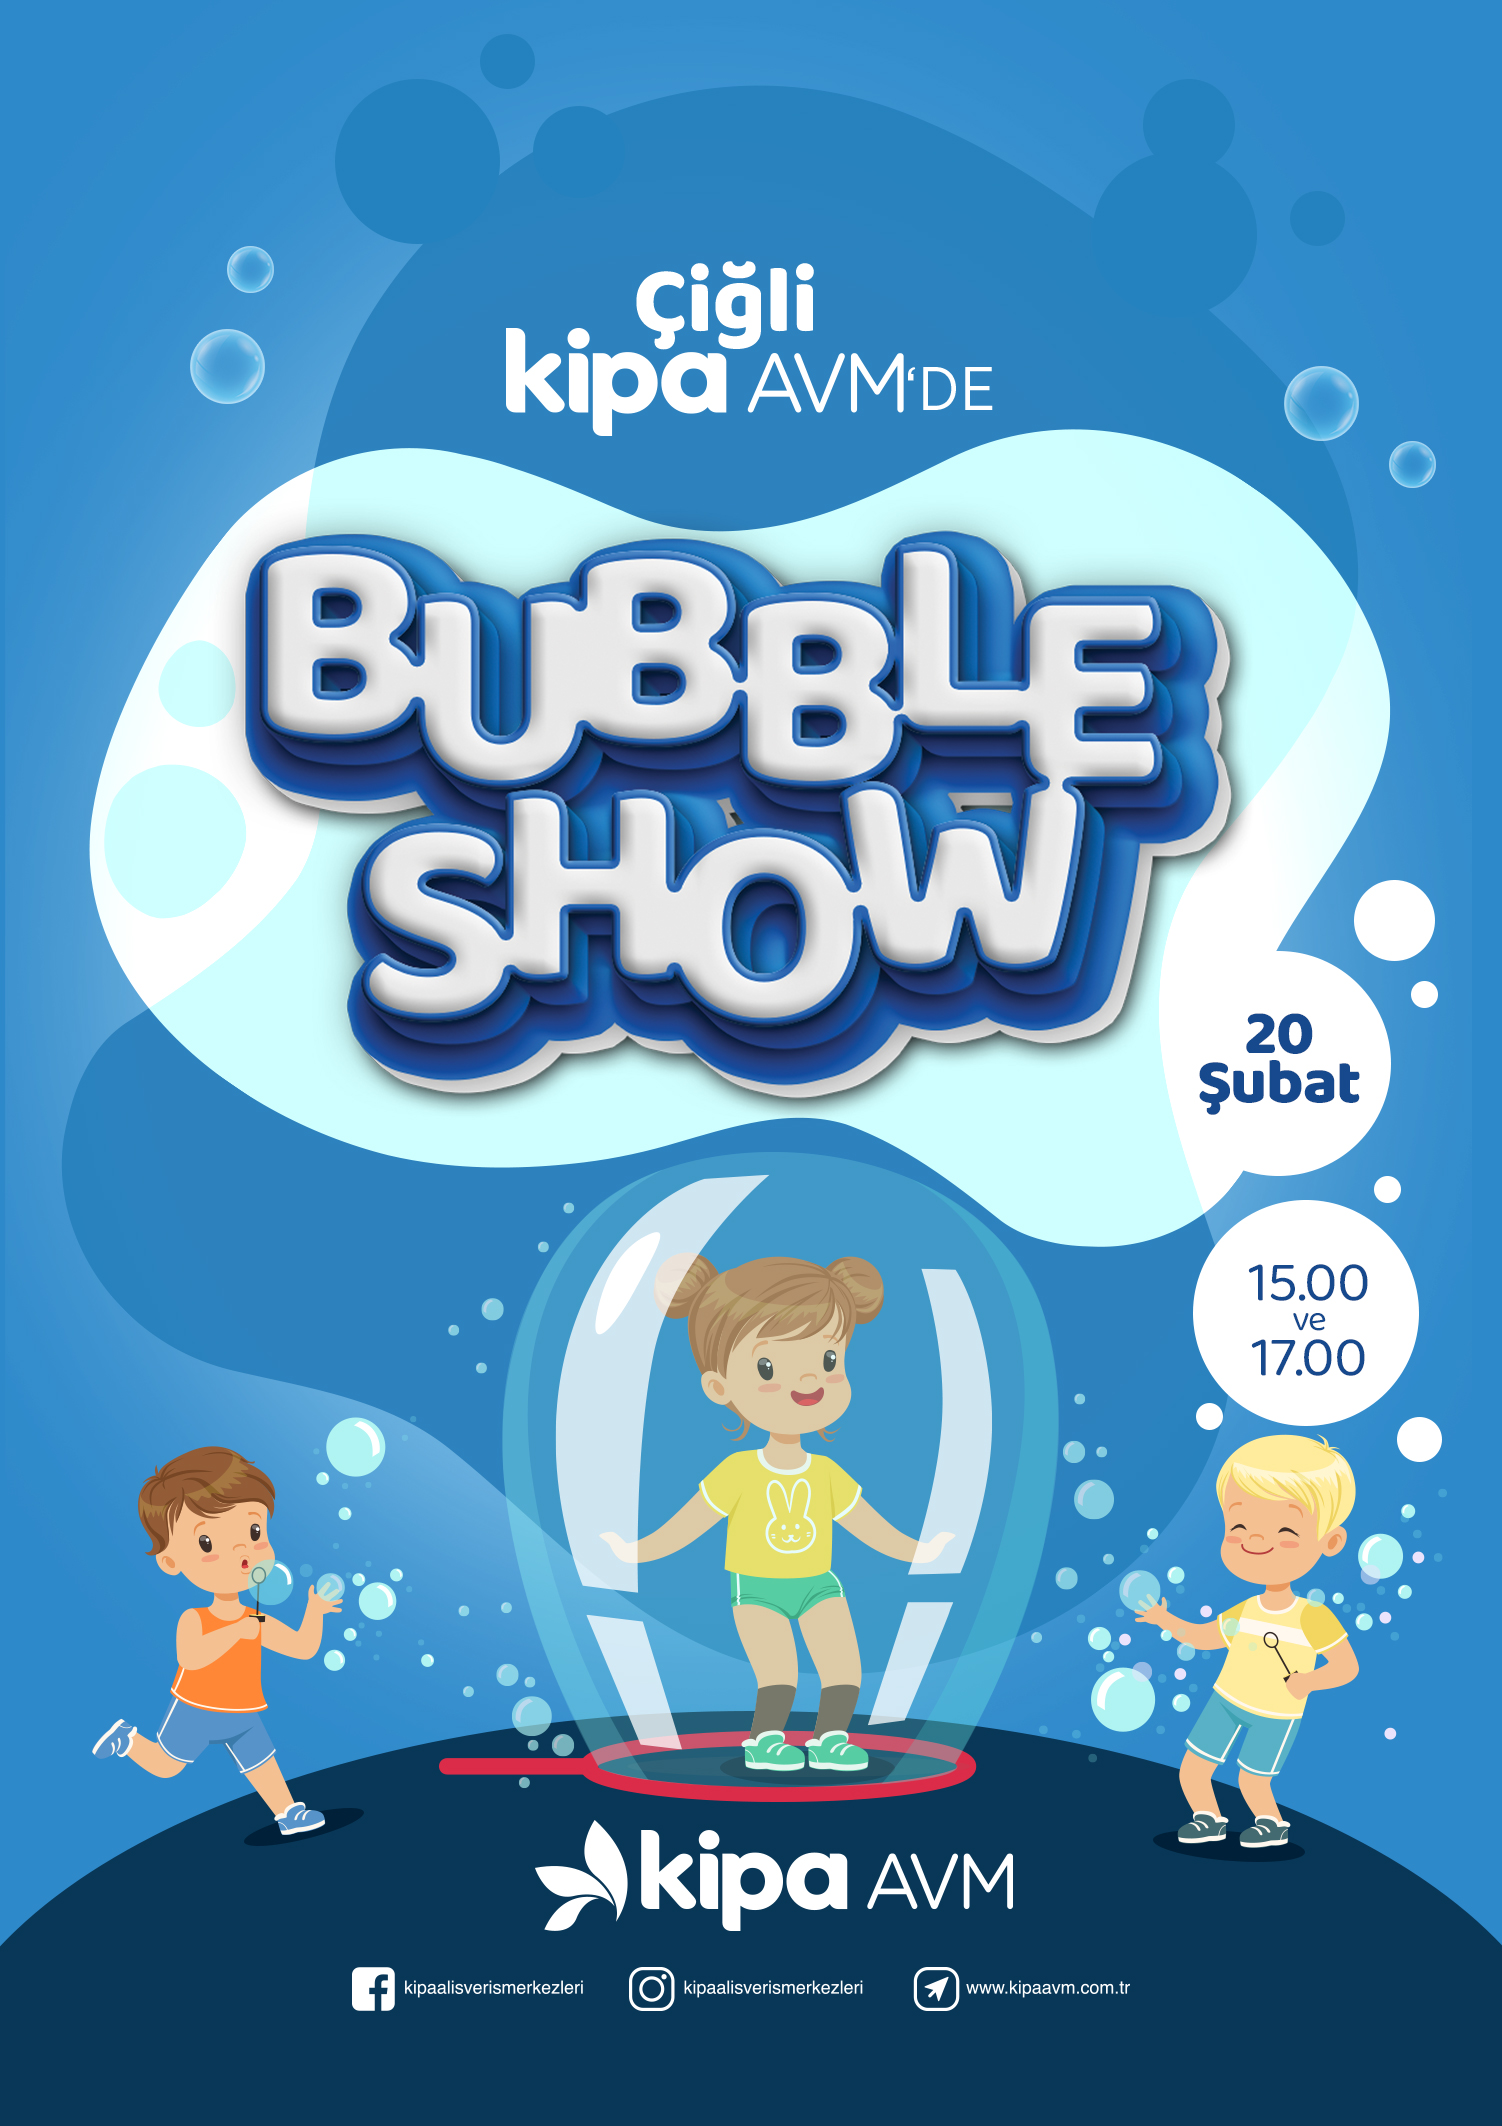 Çiğli Kipa AVM'de Bubble Show!
